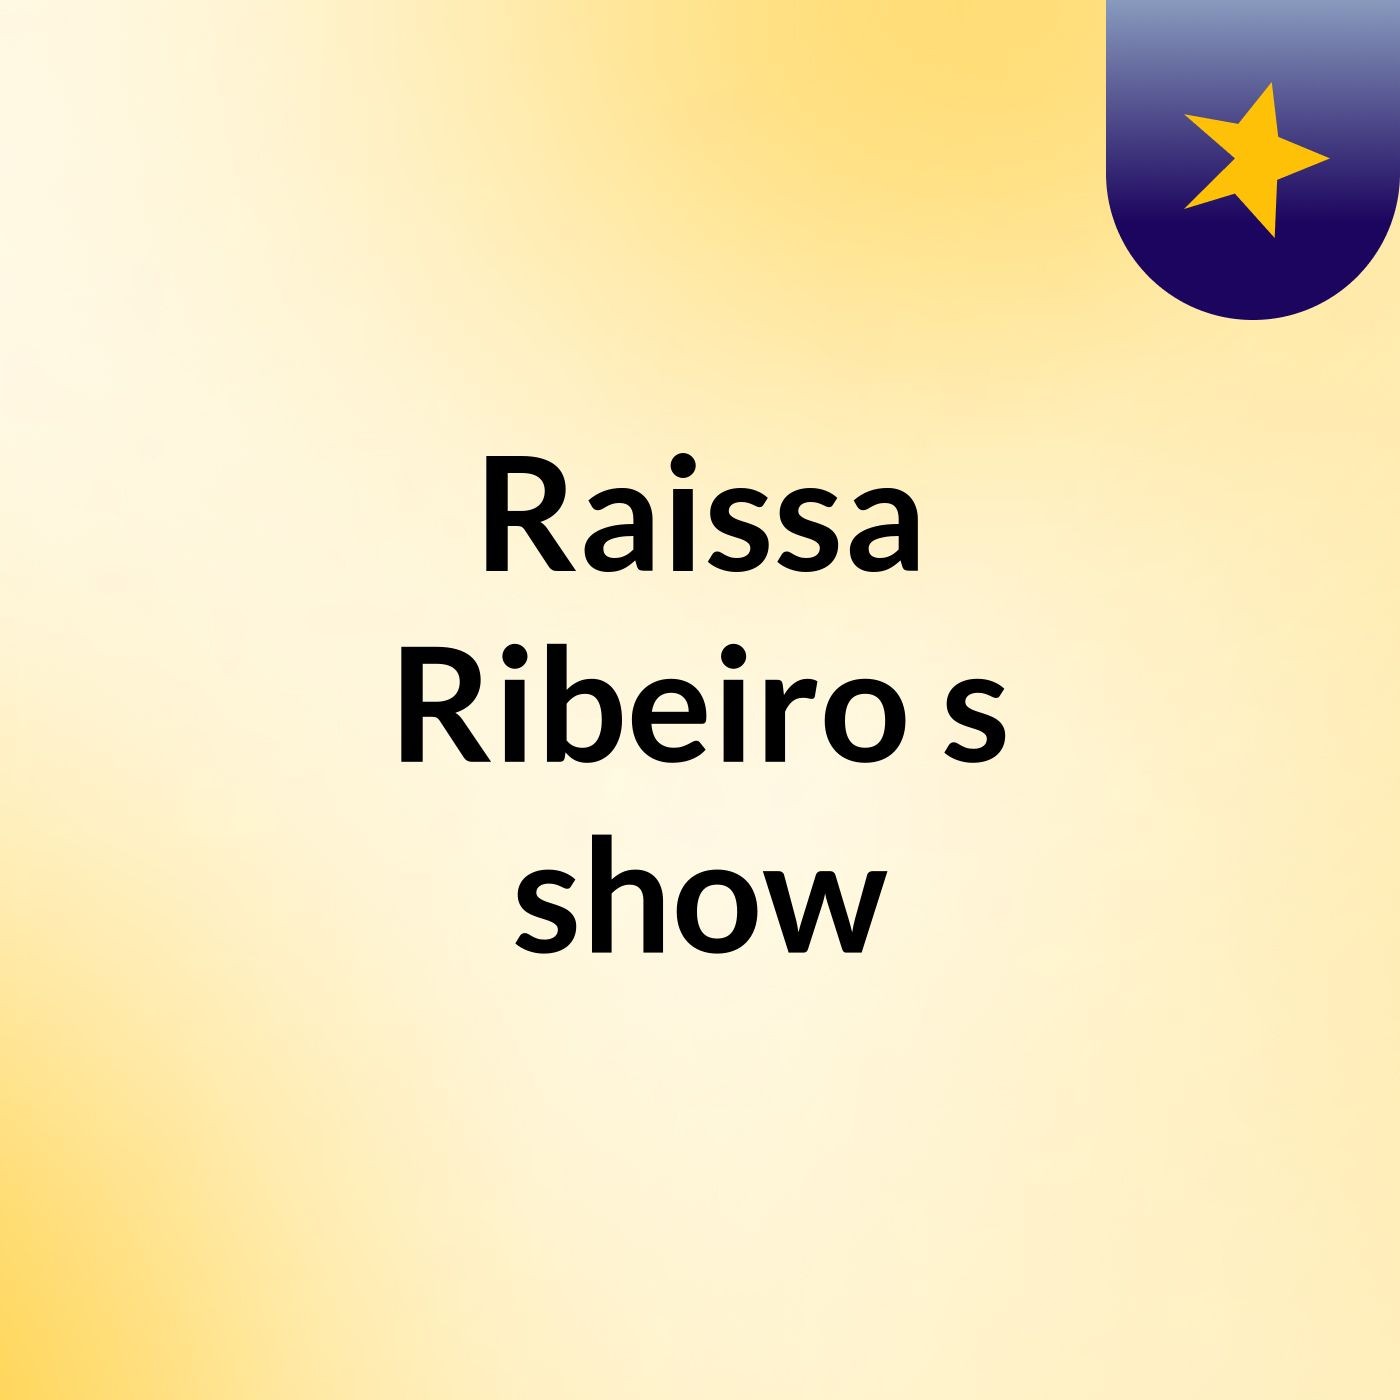 Raissa Ribeiro's show